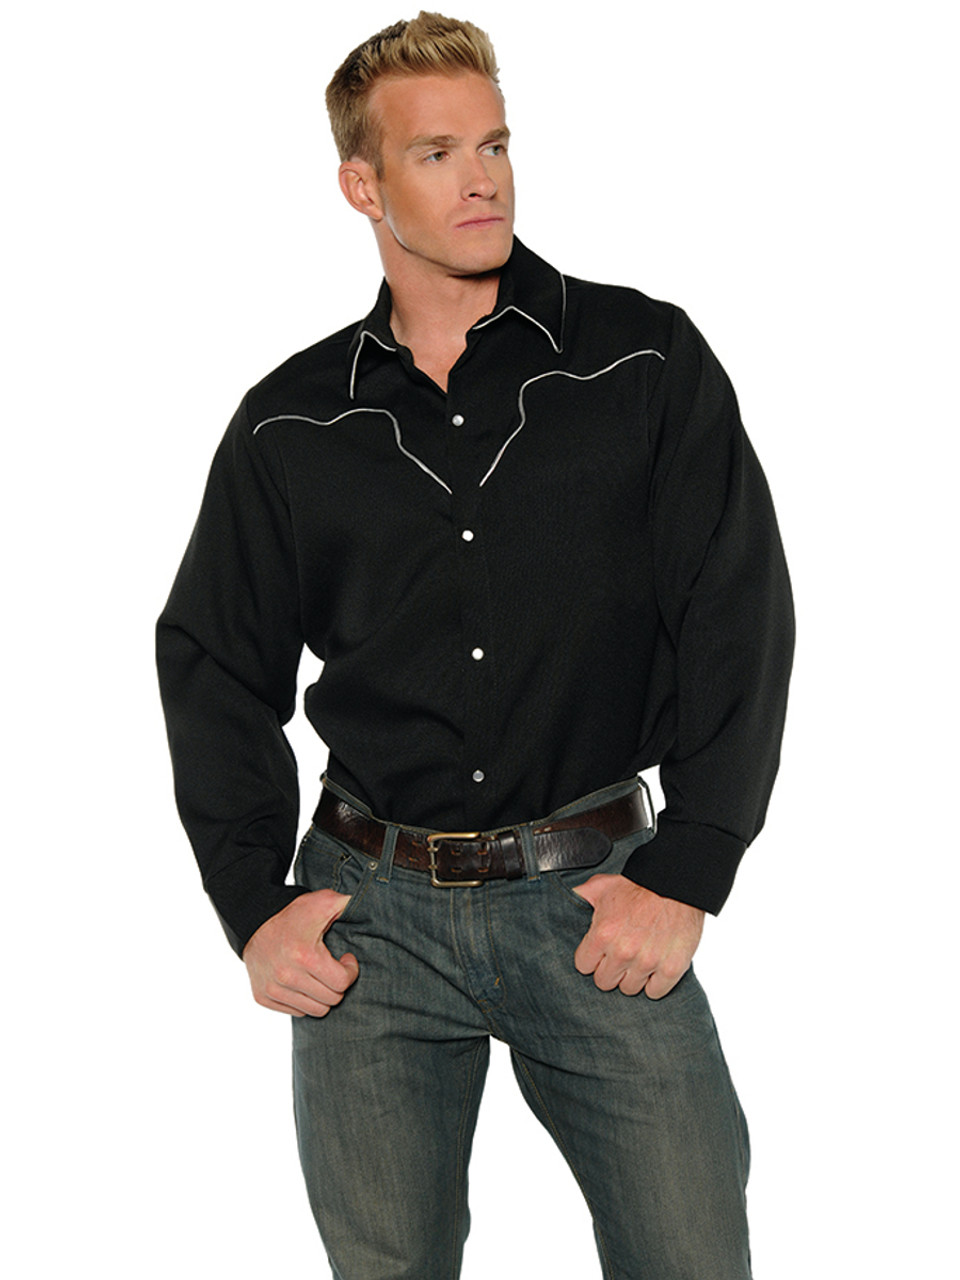 Black Cowboy Shirt Costume